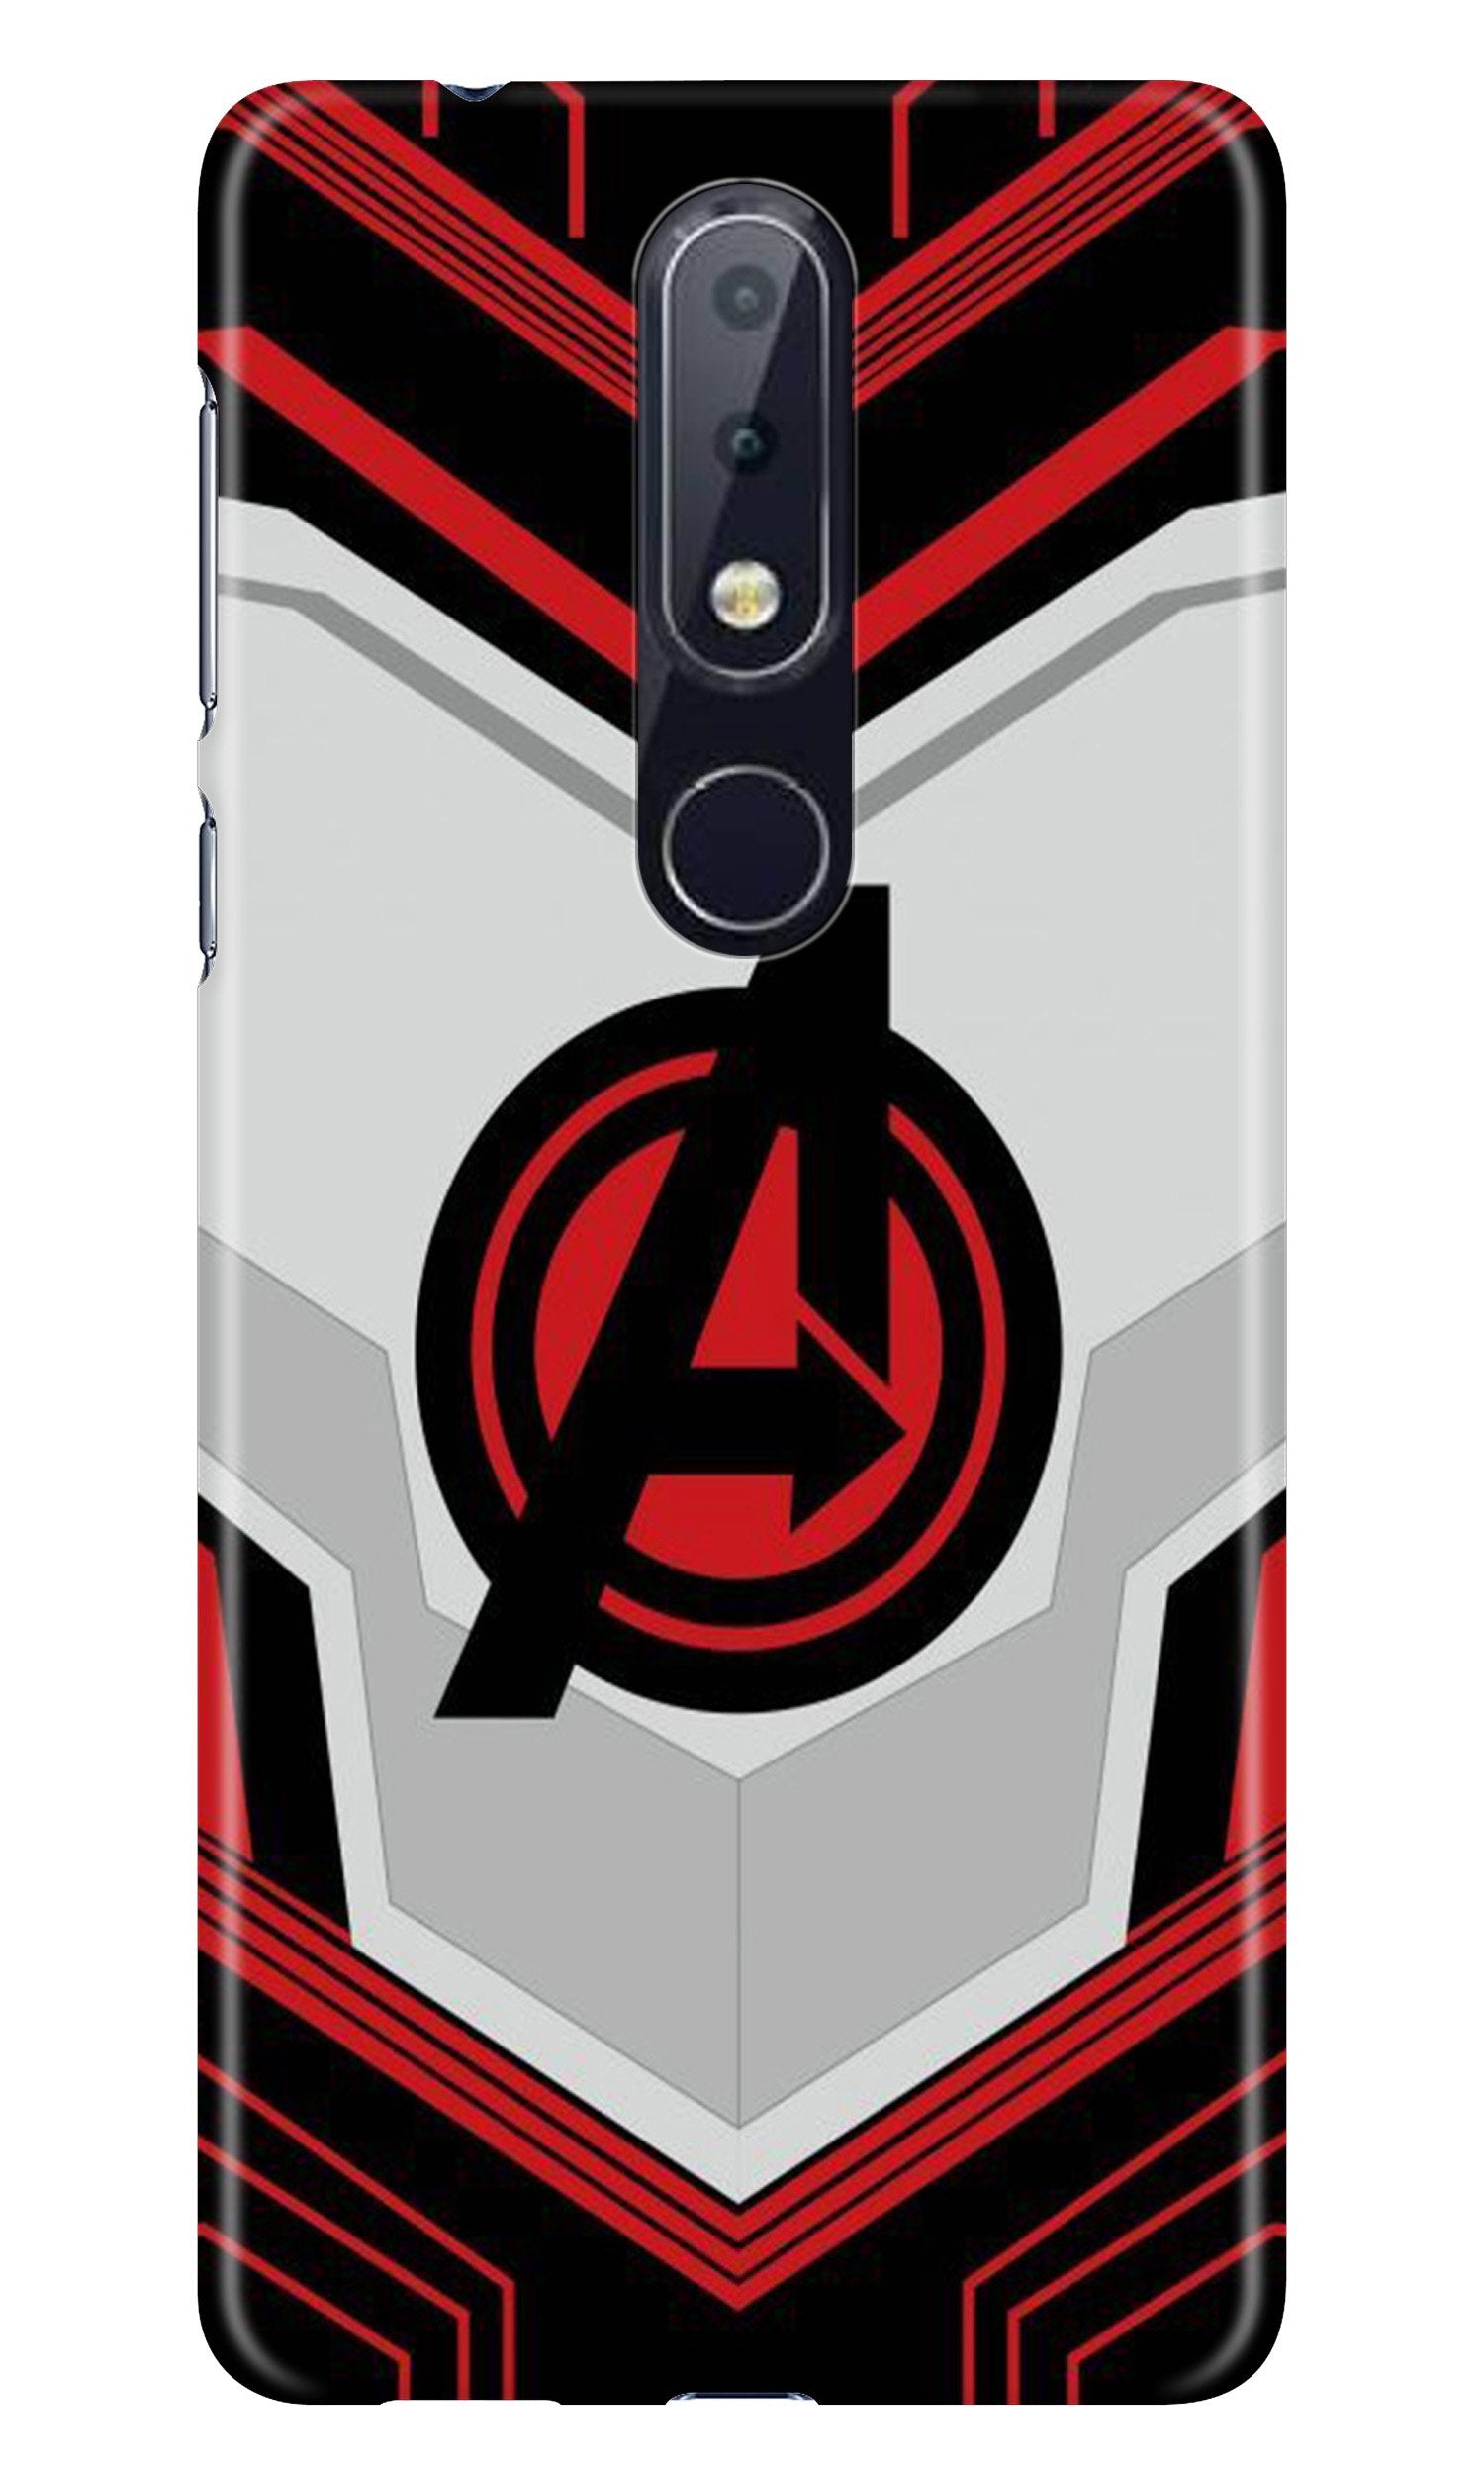 Avengers2 Case for Nokia 4.2 (Design No. 255)